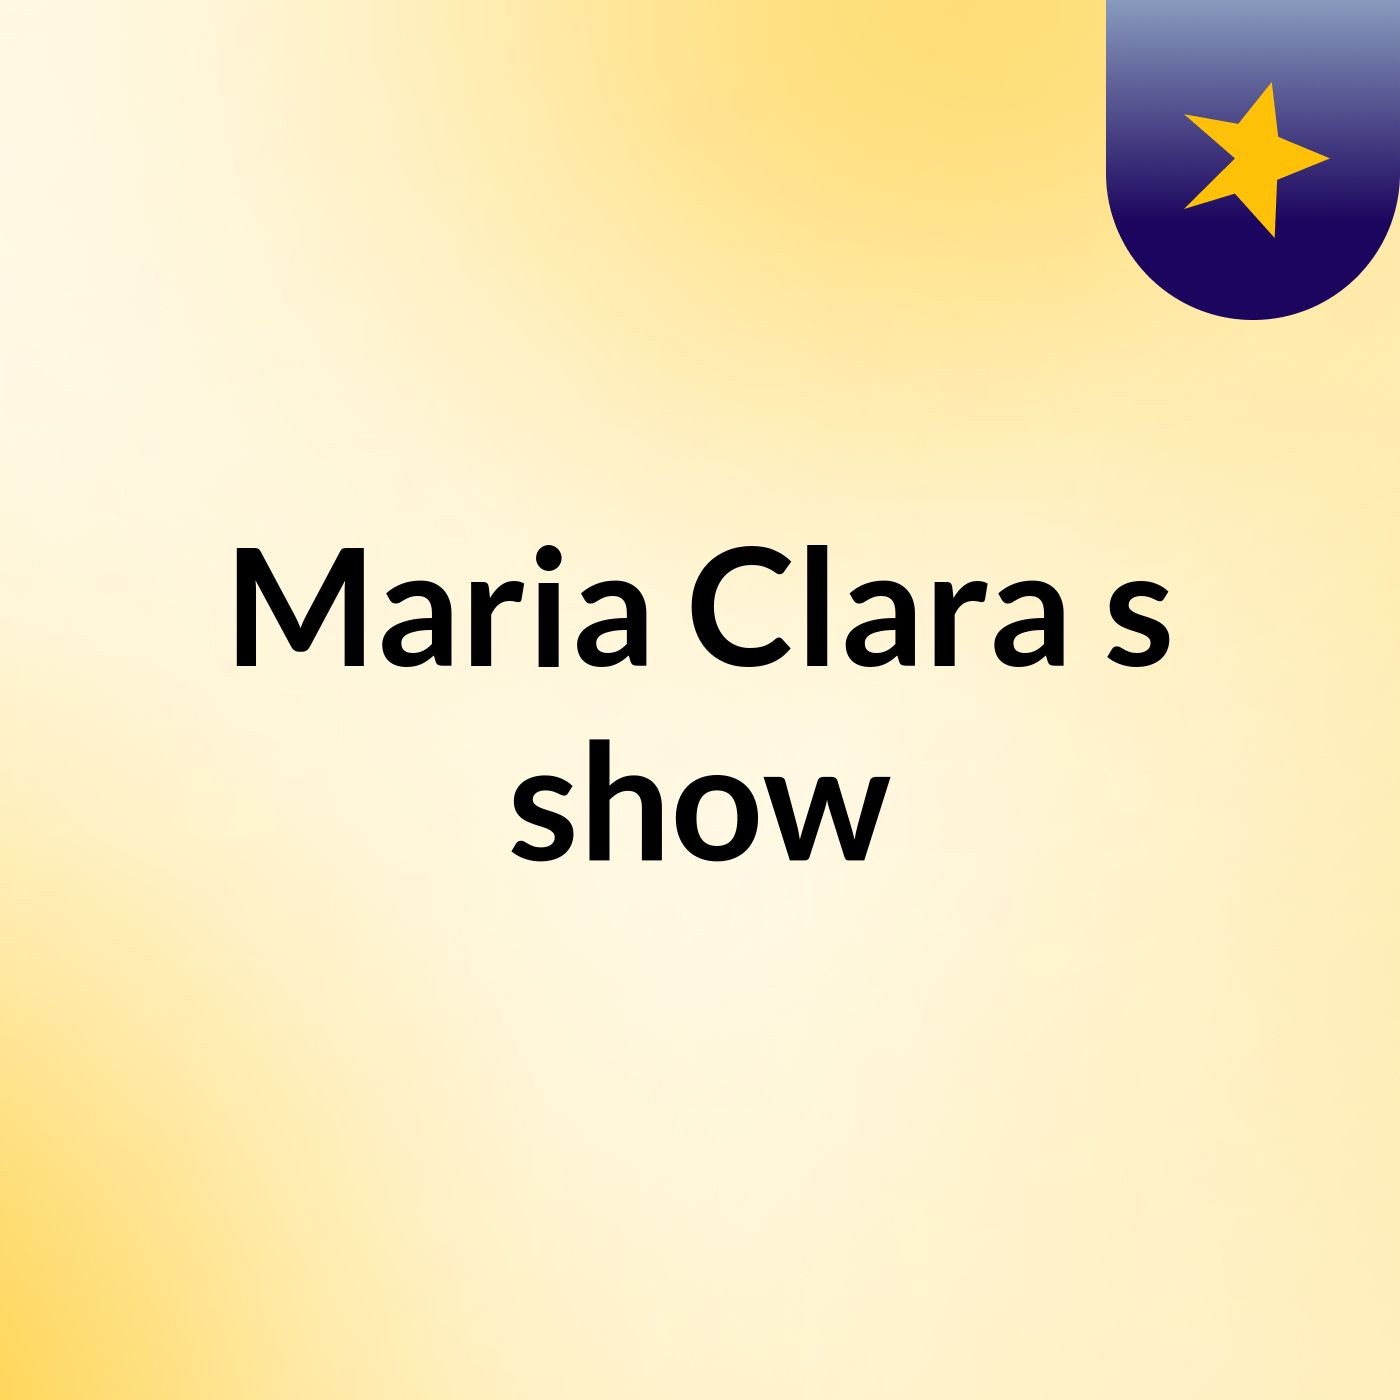 Maria Clara's show